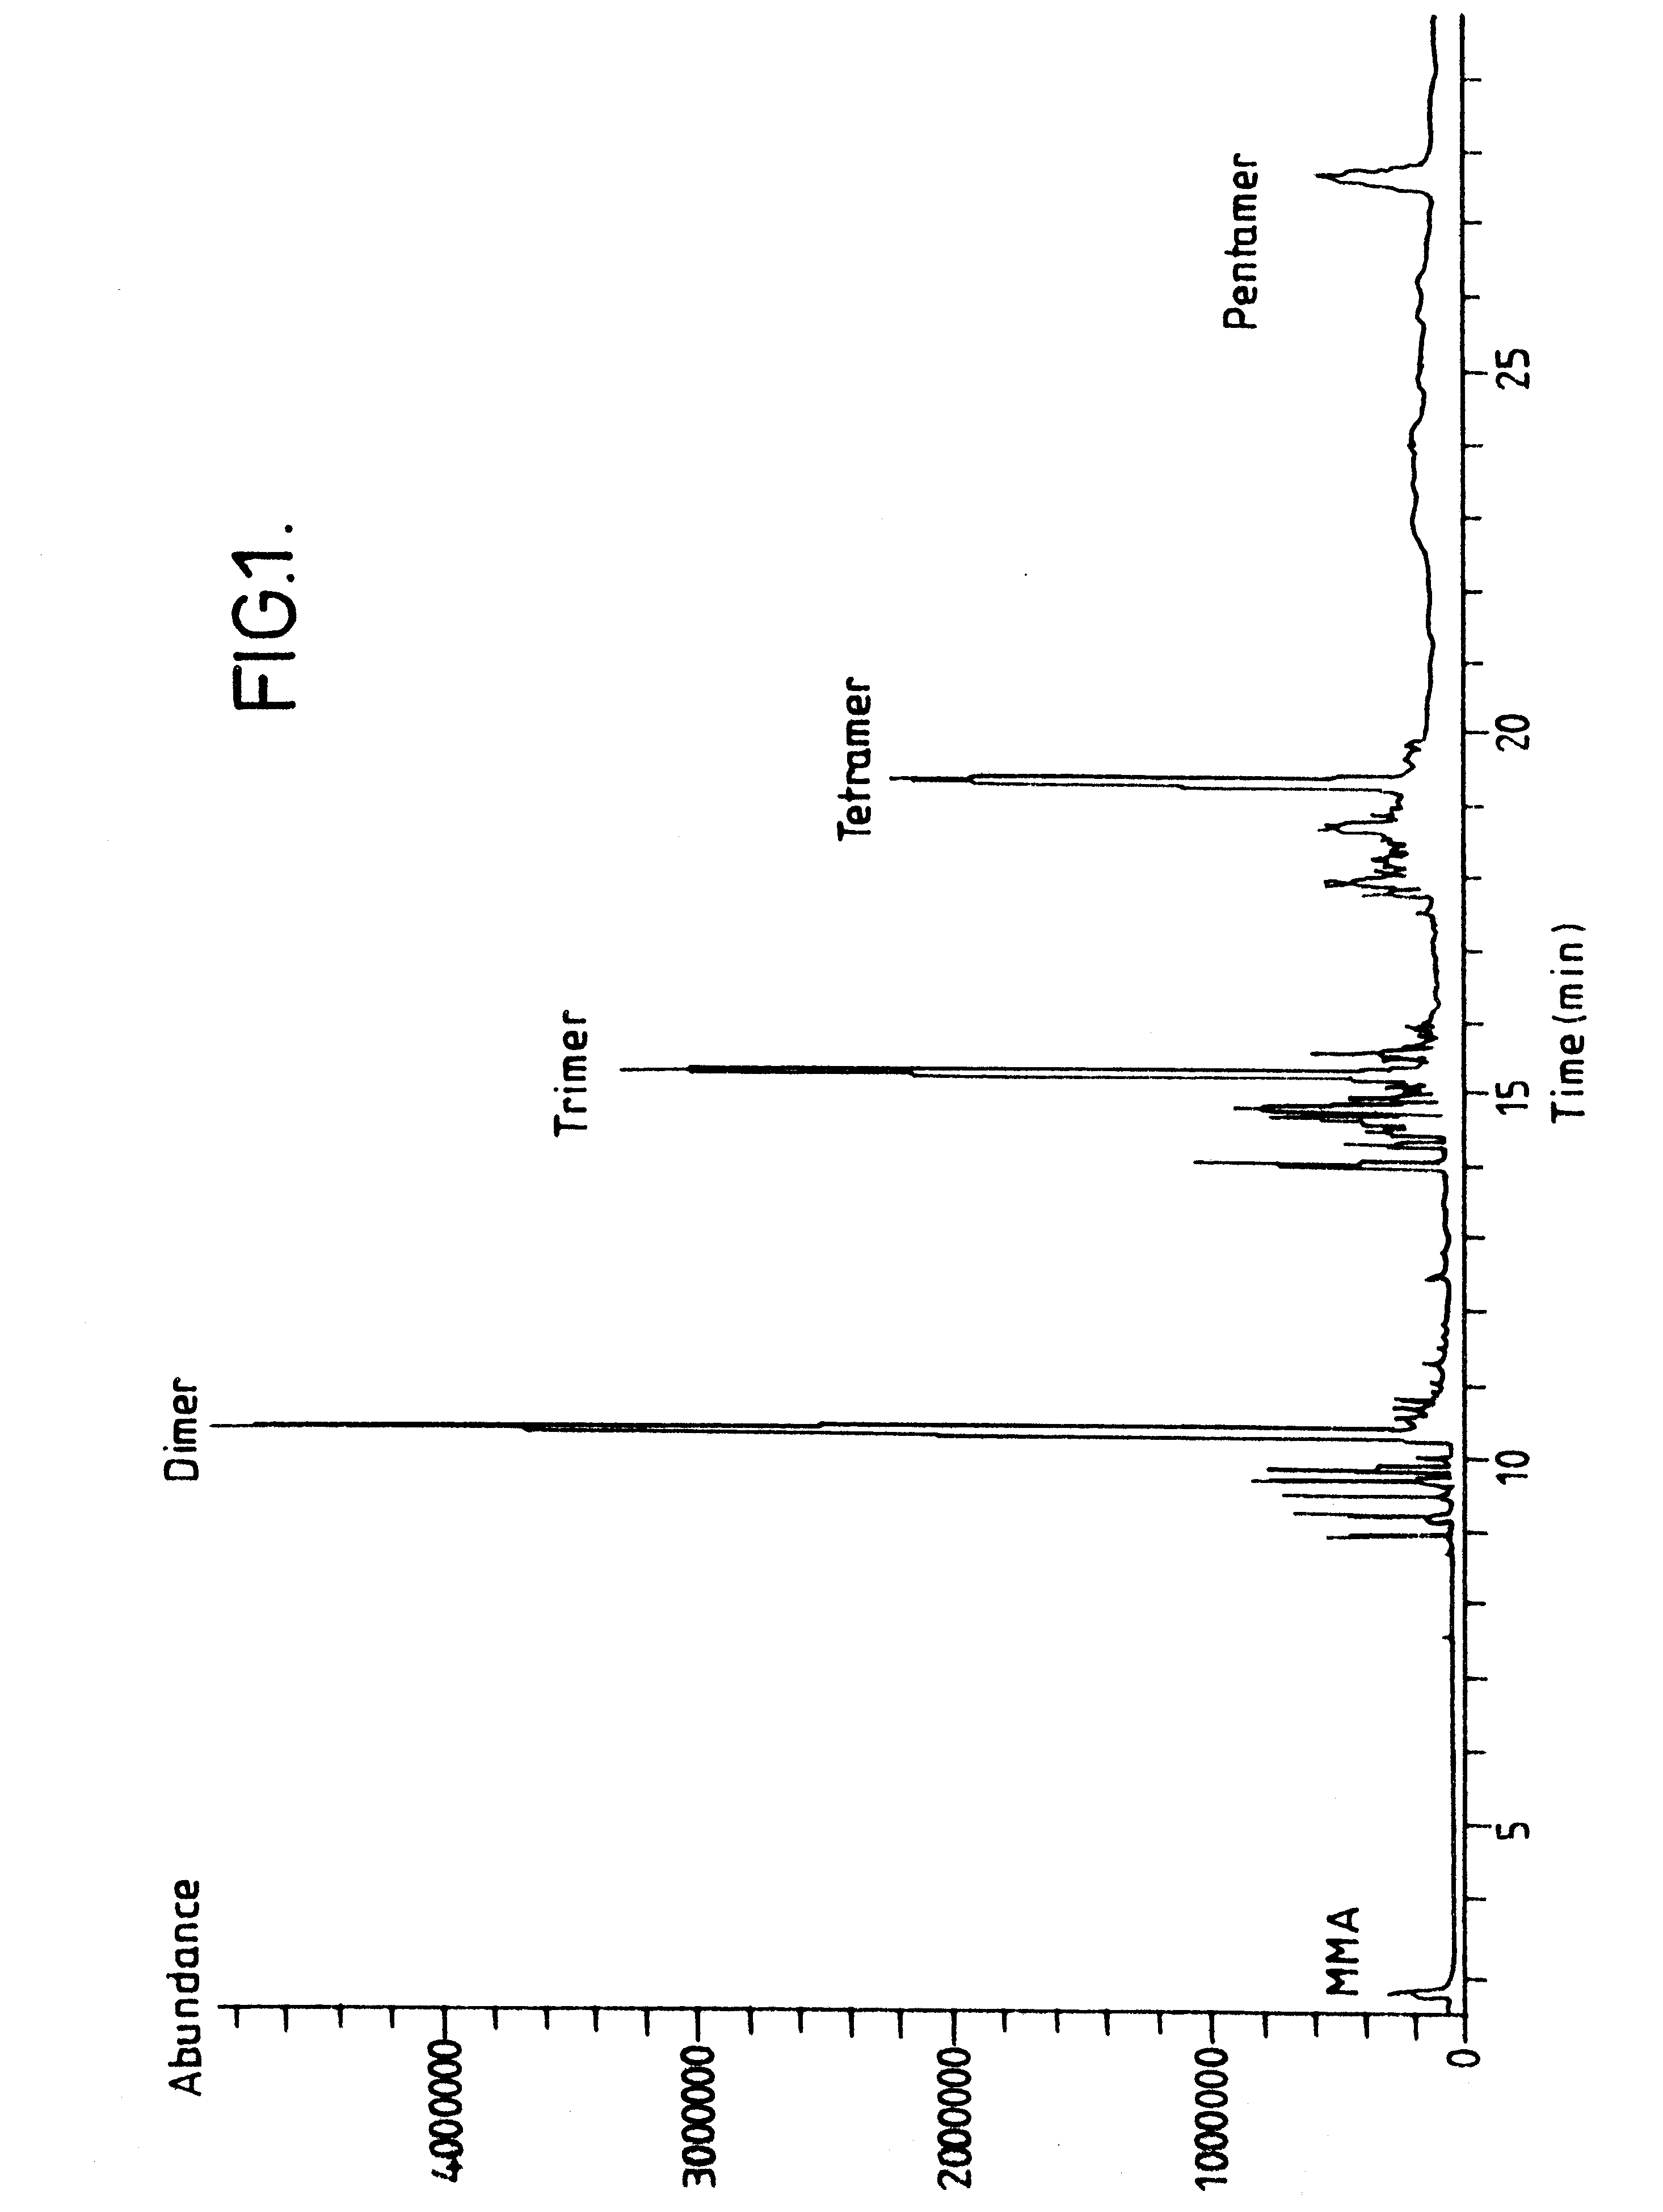 Electrolyte cosolvents including acrylate and methacrylate oligomers